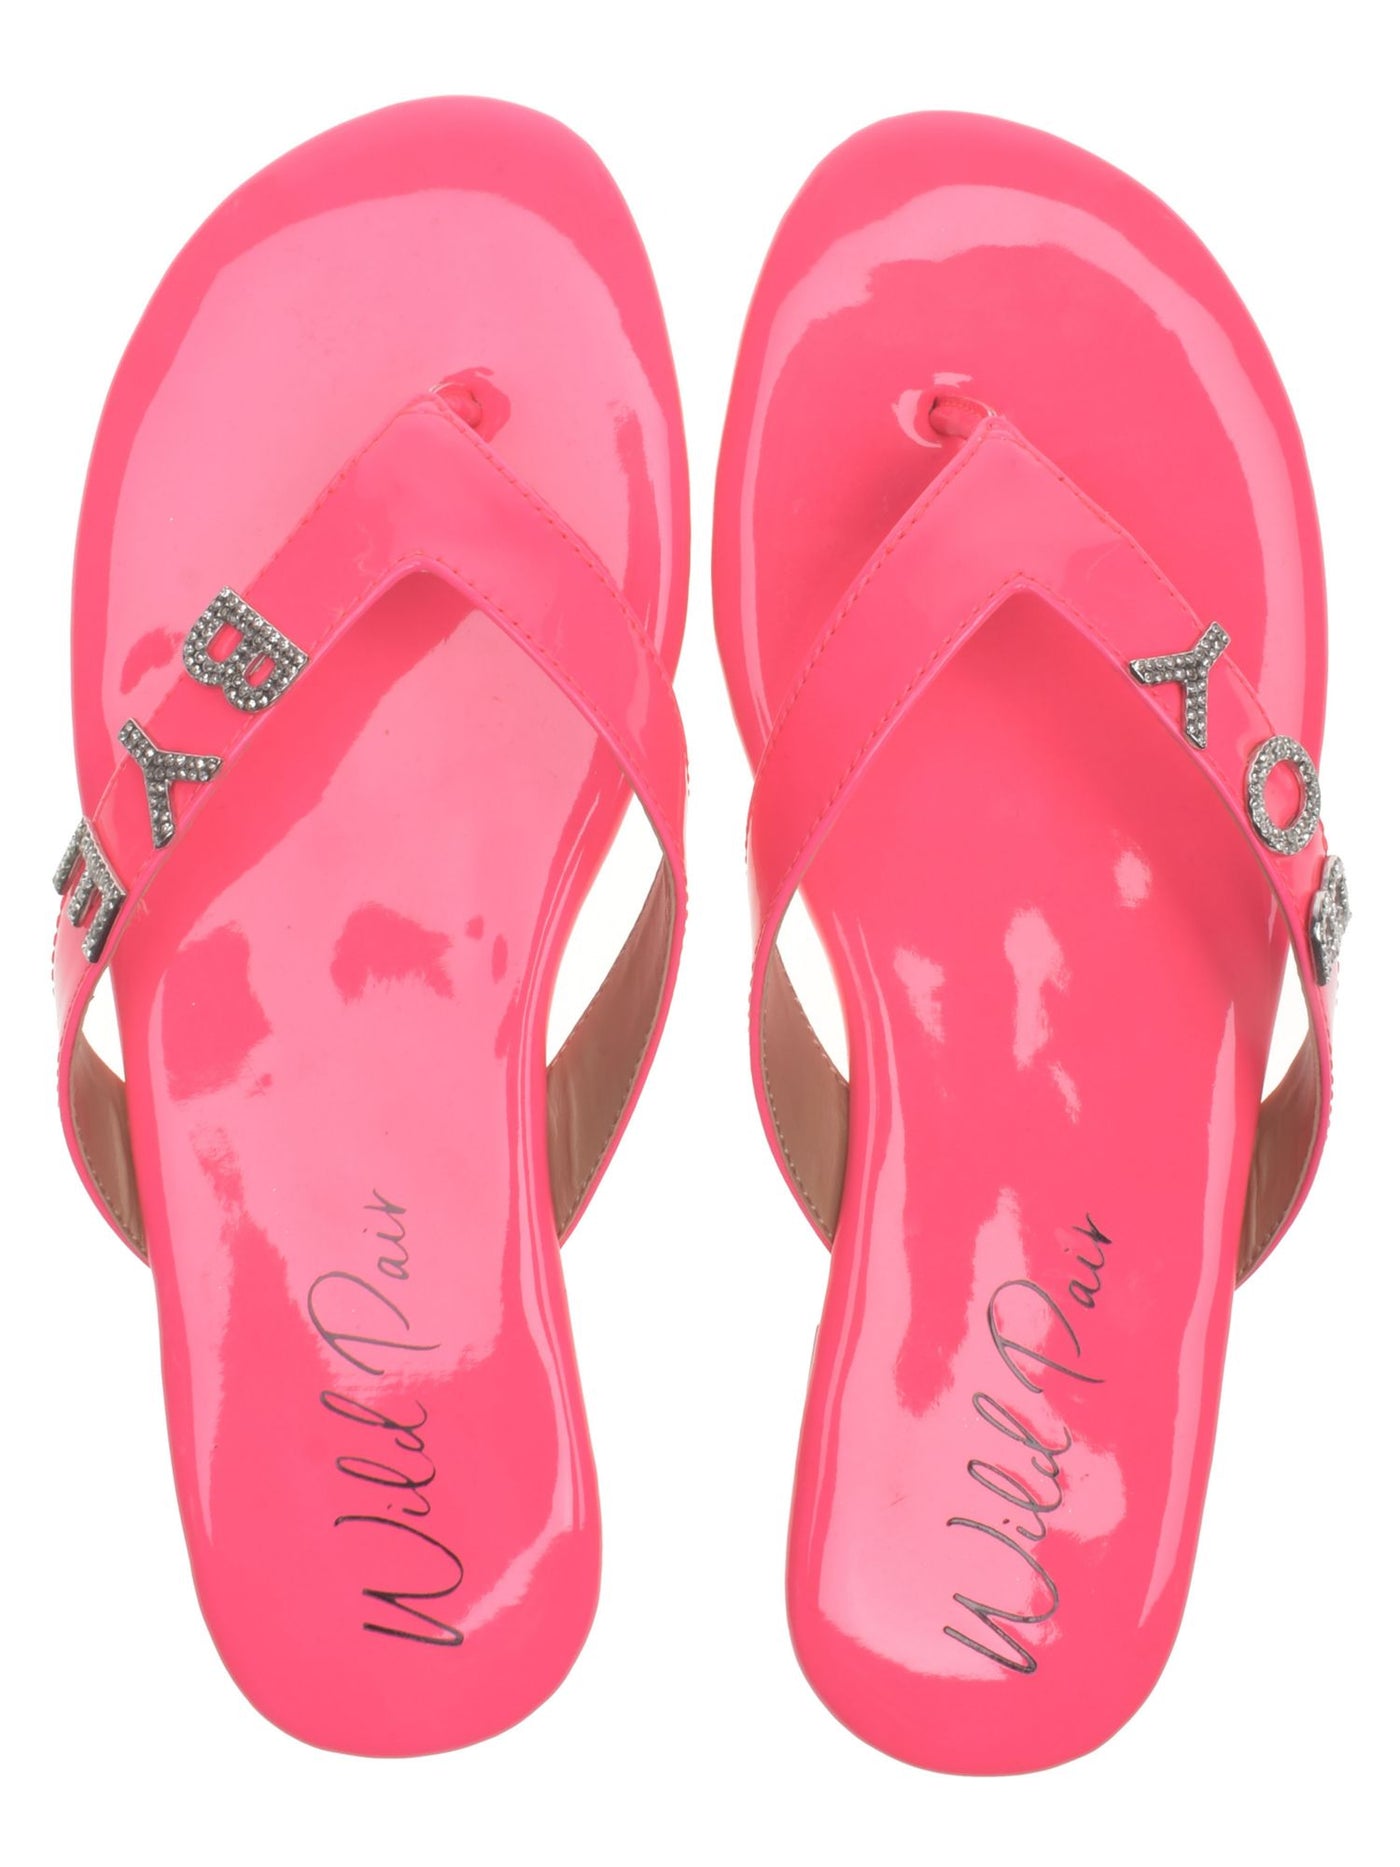 WILD PAIR Womens Pink Rhinestone Fantasia Round Toe Slip On Thong Sandals Shoes 8.5 M